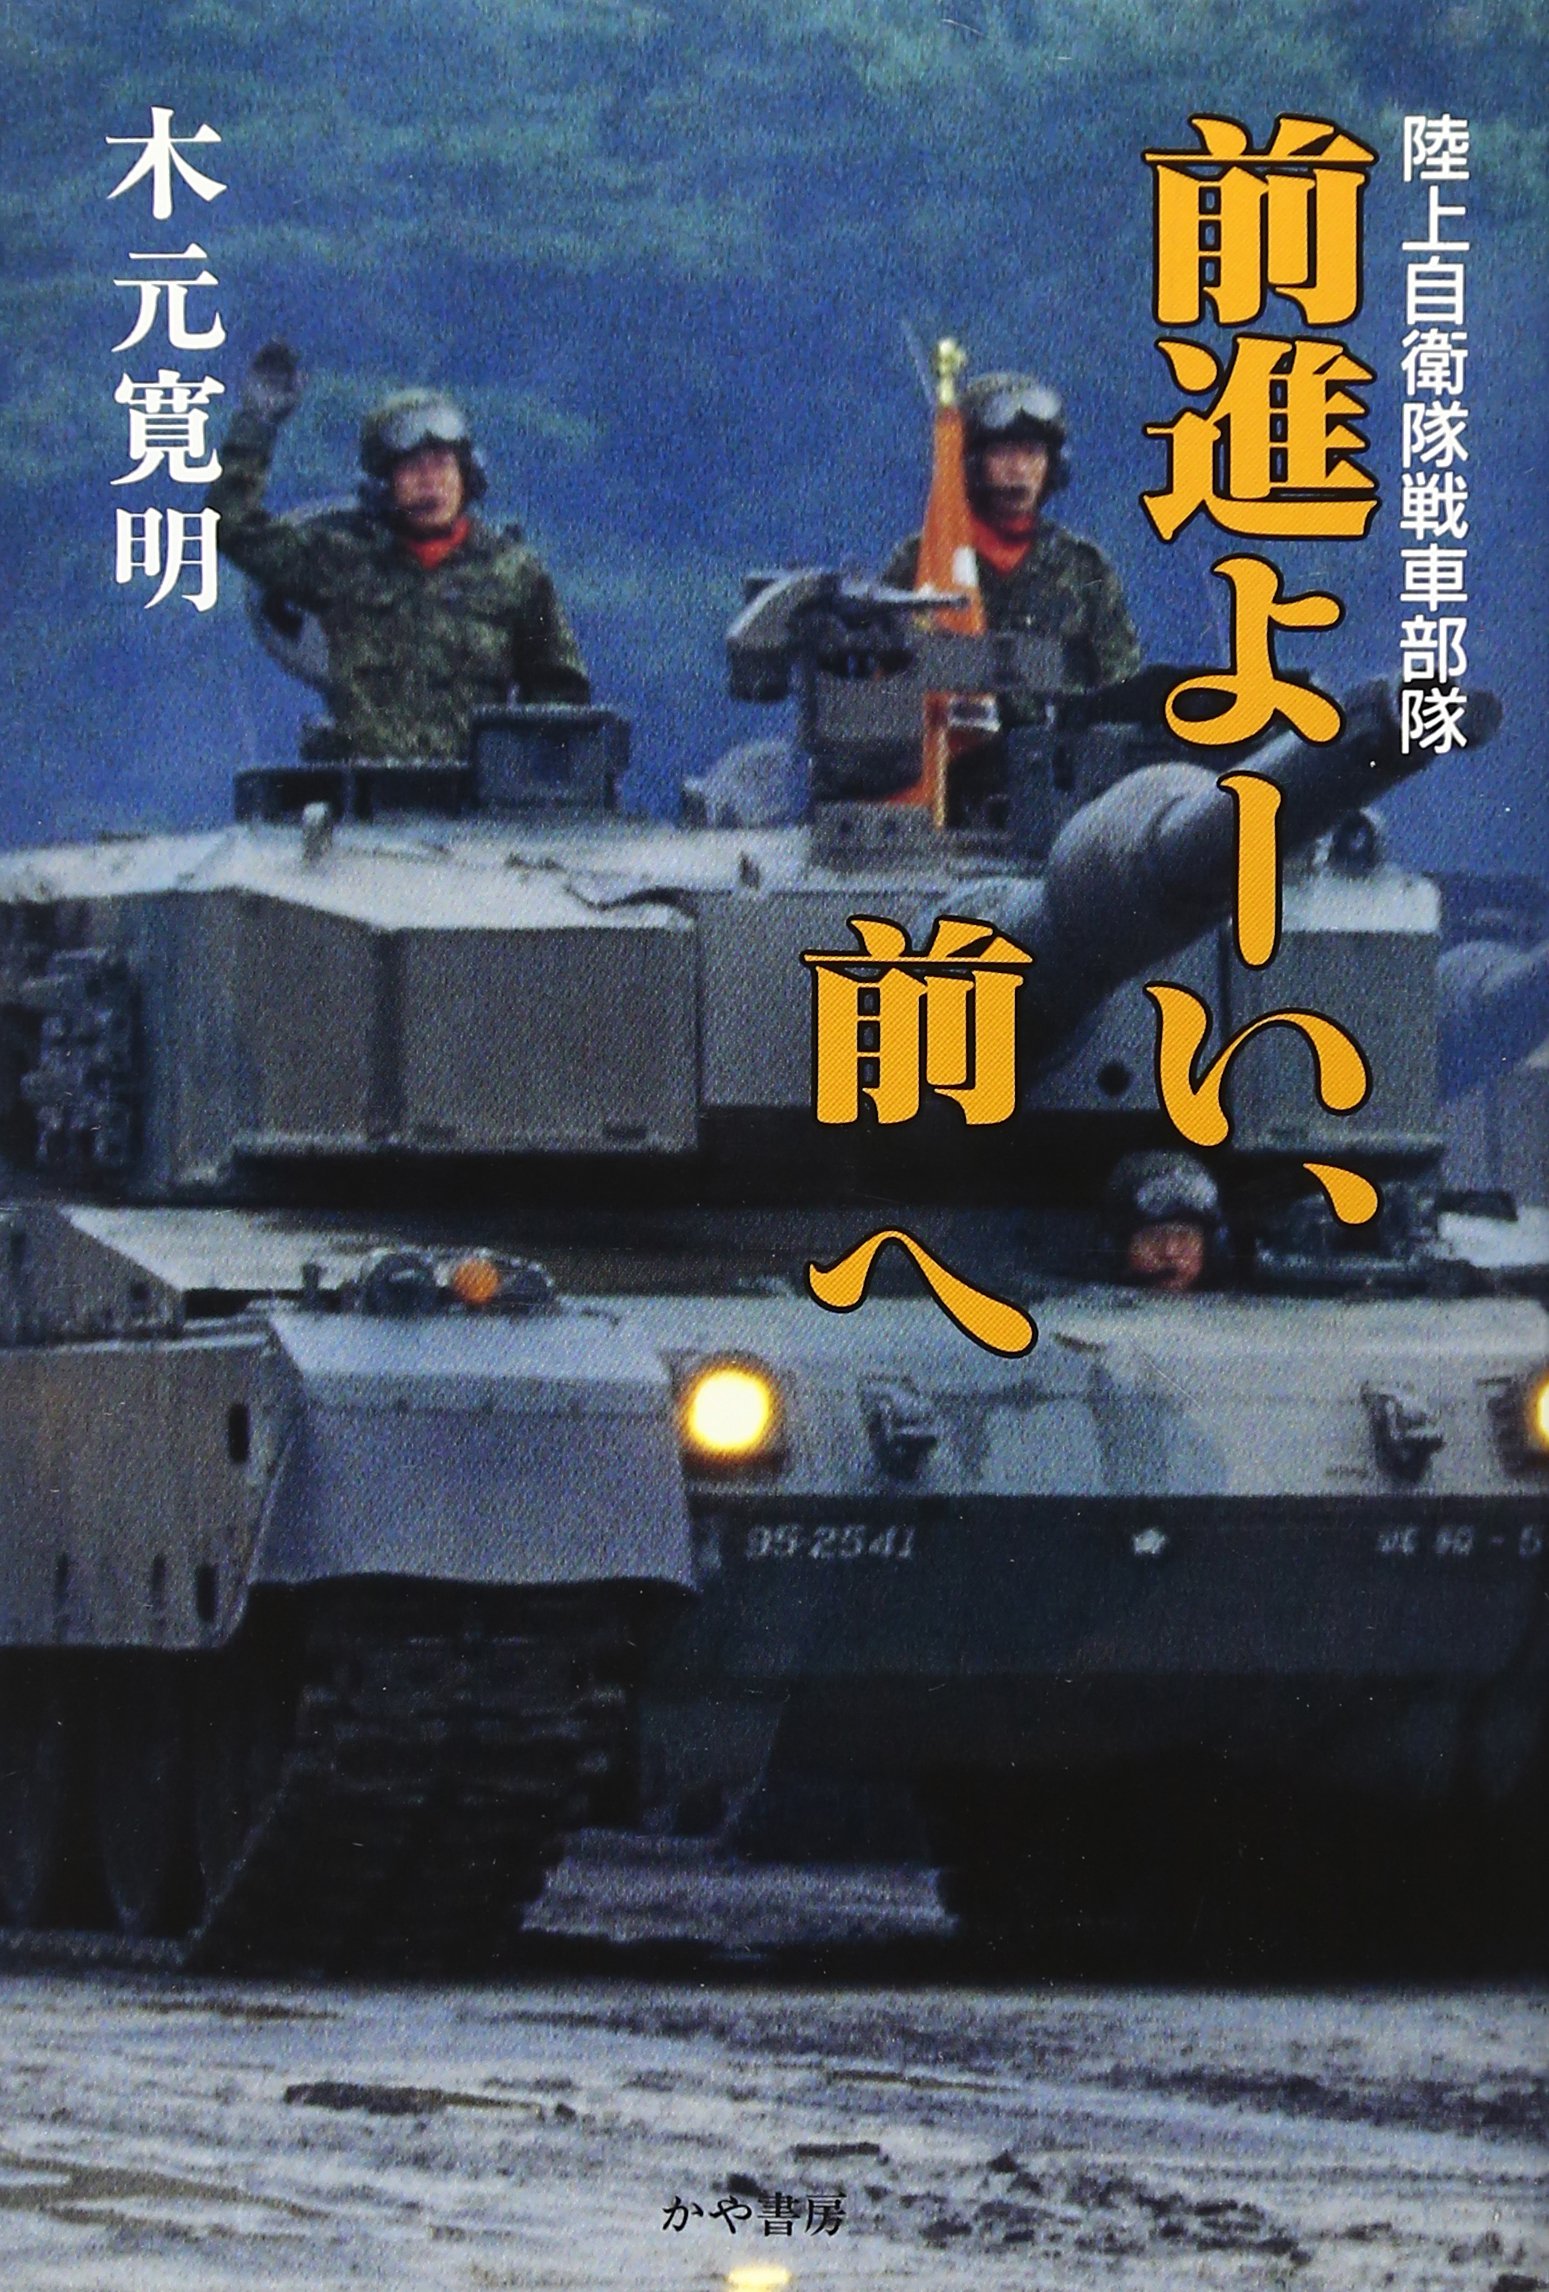 type-90-type90-tanks-mbt-jgsdf-gsdf-ija-japan-japanese-tokyo.jpg